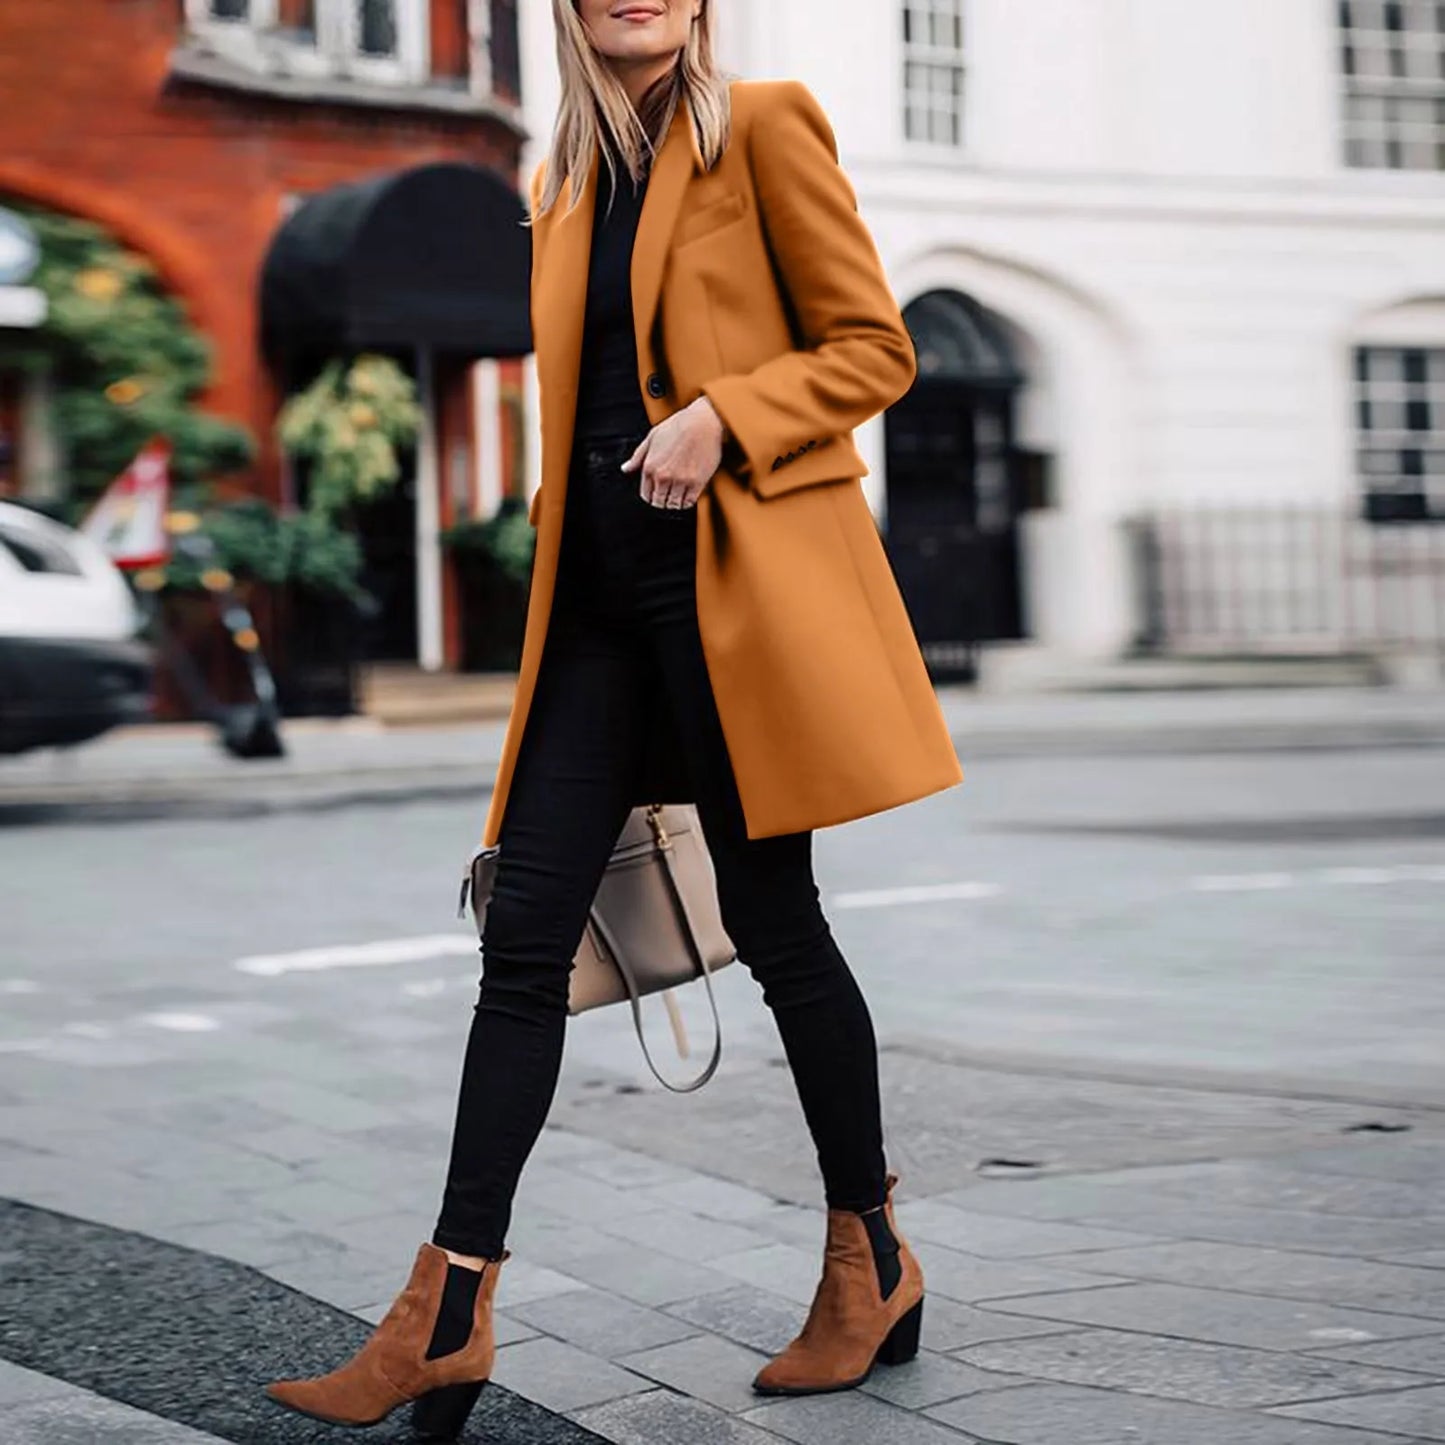 Winter Wool Women Light Weight Thin Jacket Slim Long Sleeve Office Business Wrap Coat